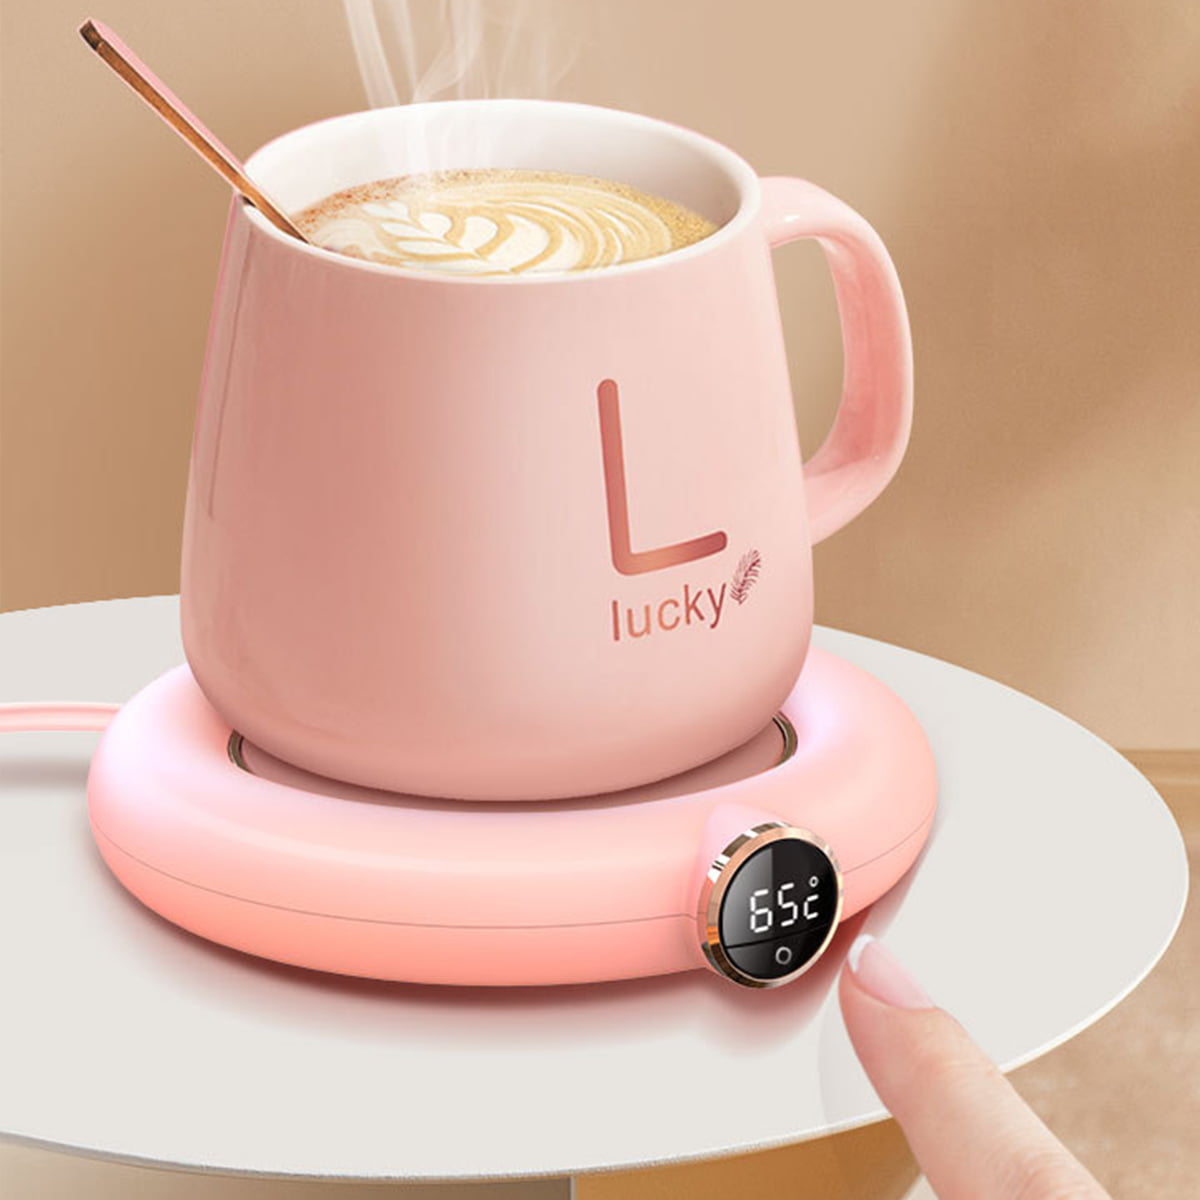 Coffee Mug Warmer – Lipto Tech